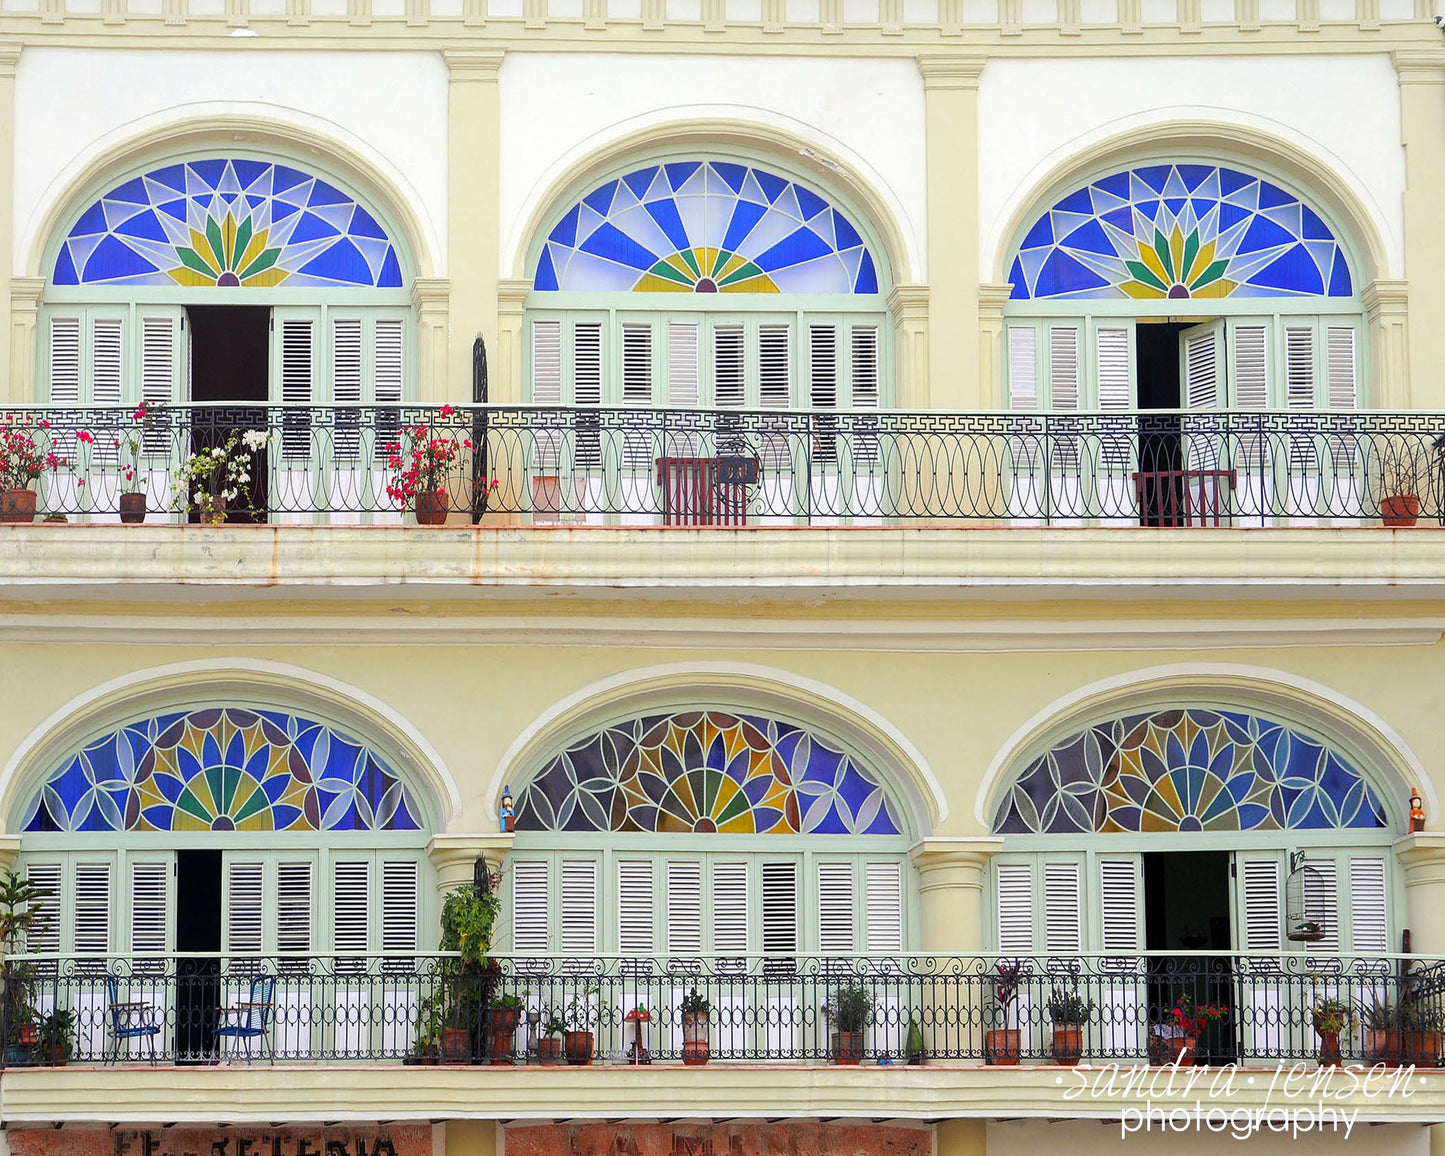 Print - Cuba "Havana Windows"